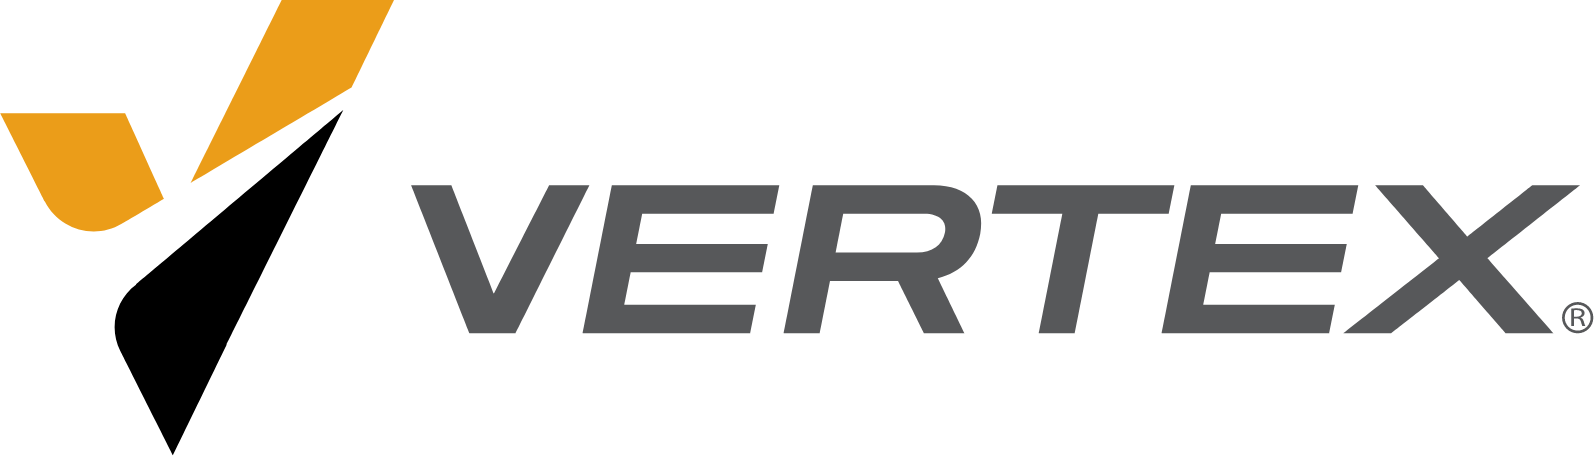 Vertex Energy
 logo large (transparent PNG)